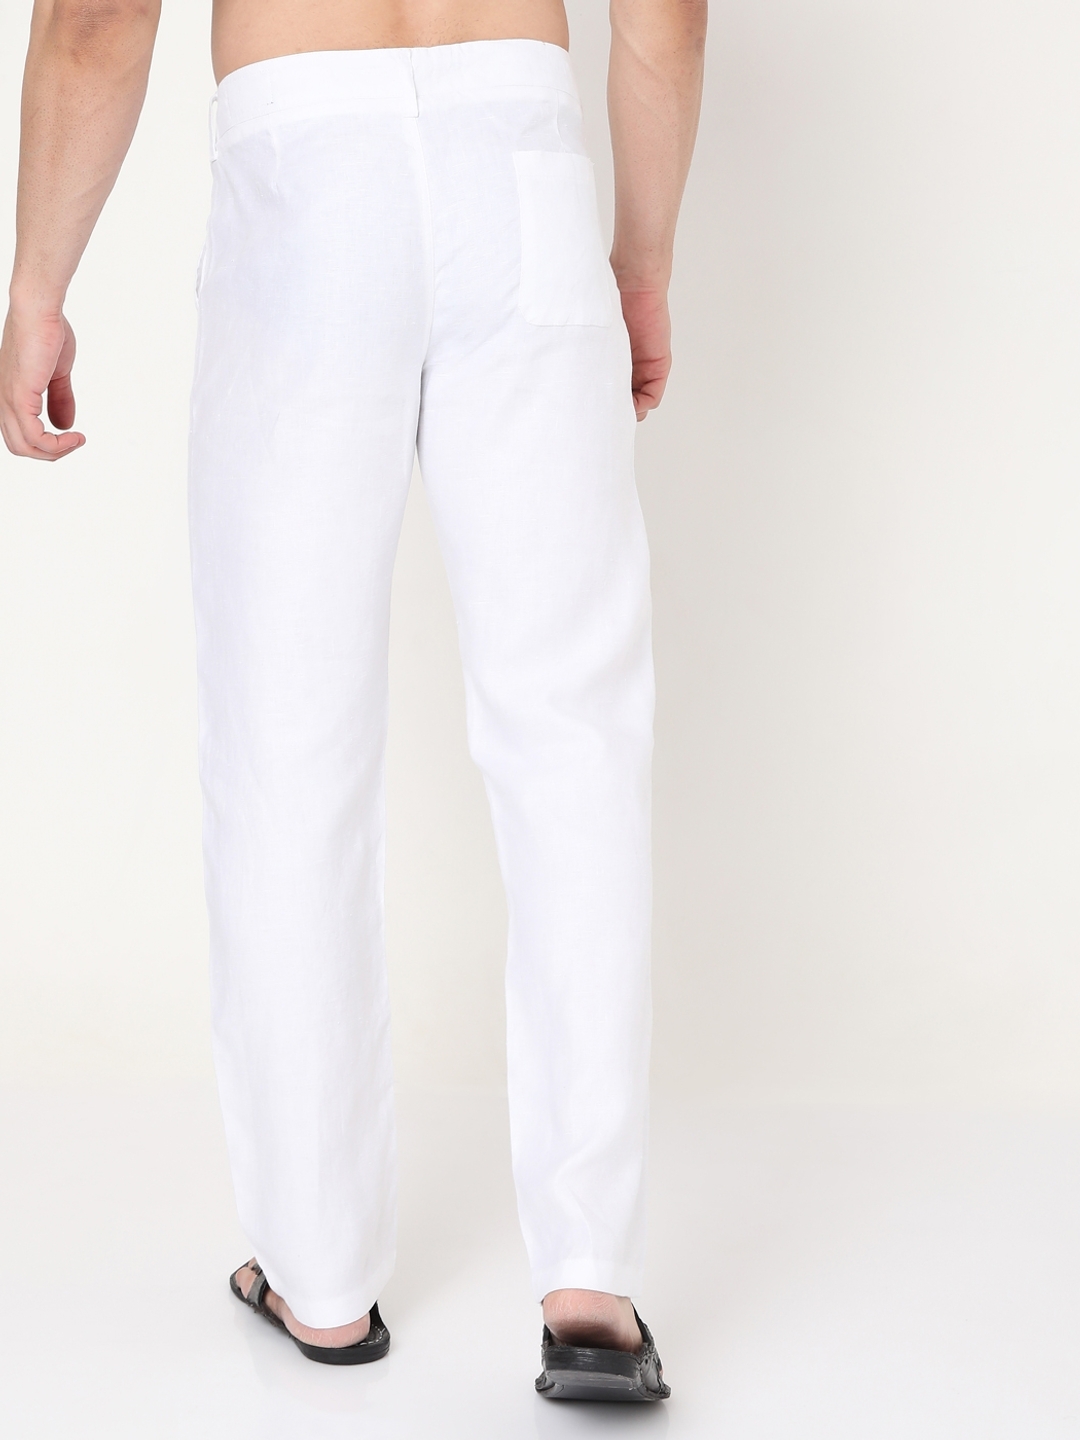 Next Look by Raymond Slim Fit Men Black Trousers - Buy Next Look by Raymond  Slim Fit Men Black Trousers Online at Best Prices in India | Flipkart.com